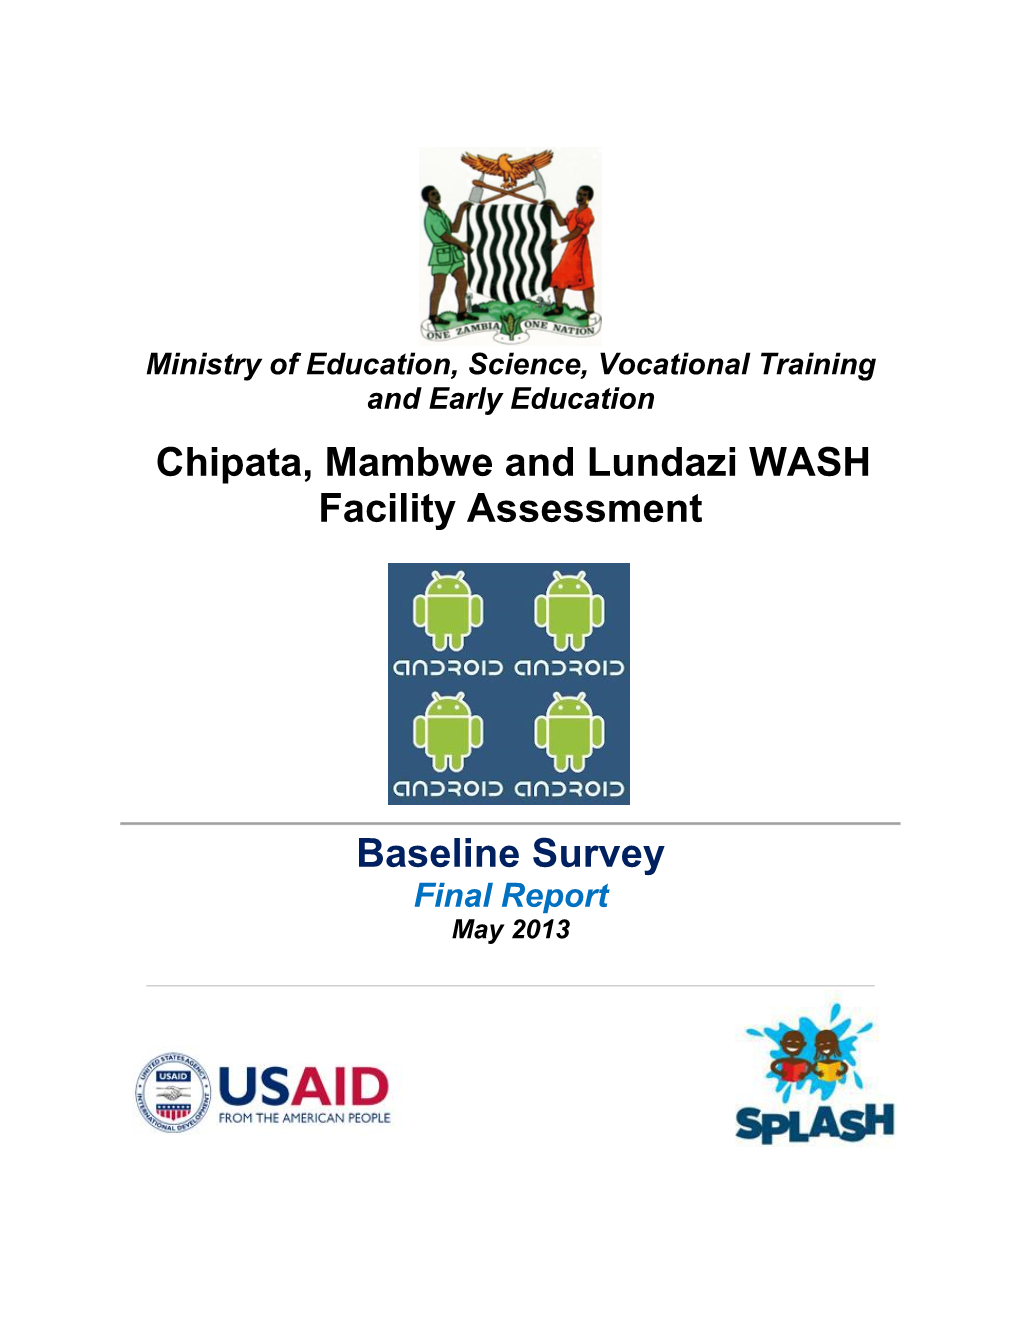 Chipata, Mambwe and Lundazi WASH Facility Assessment Baseline Survey